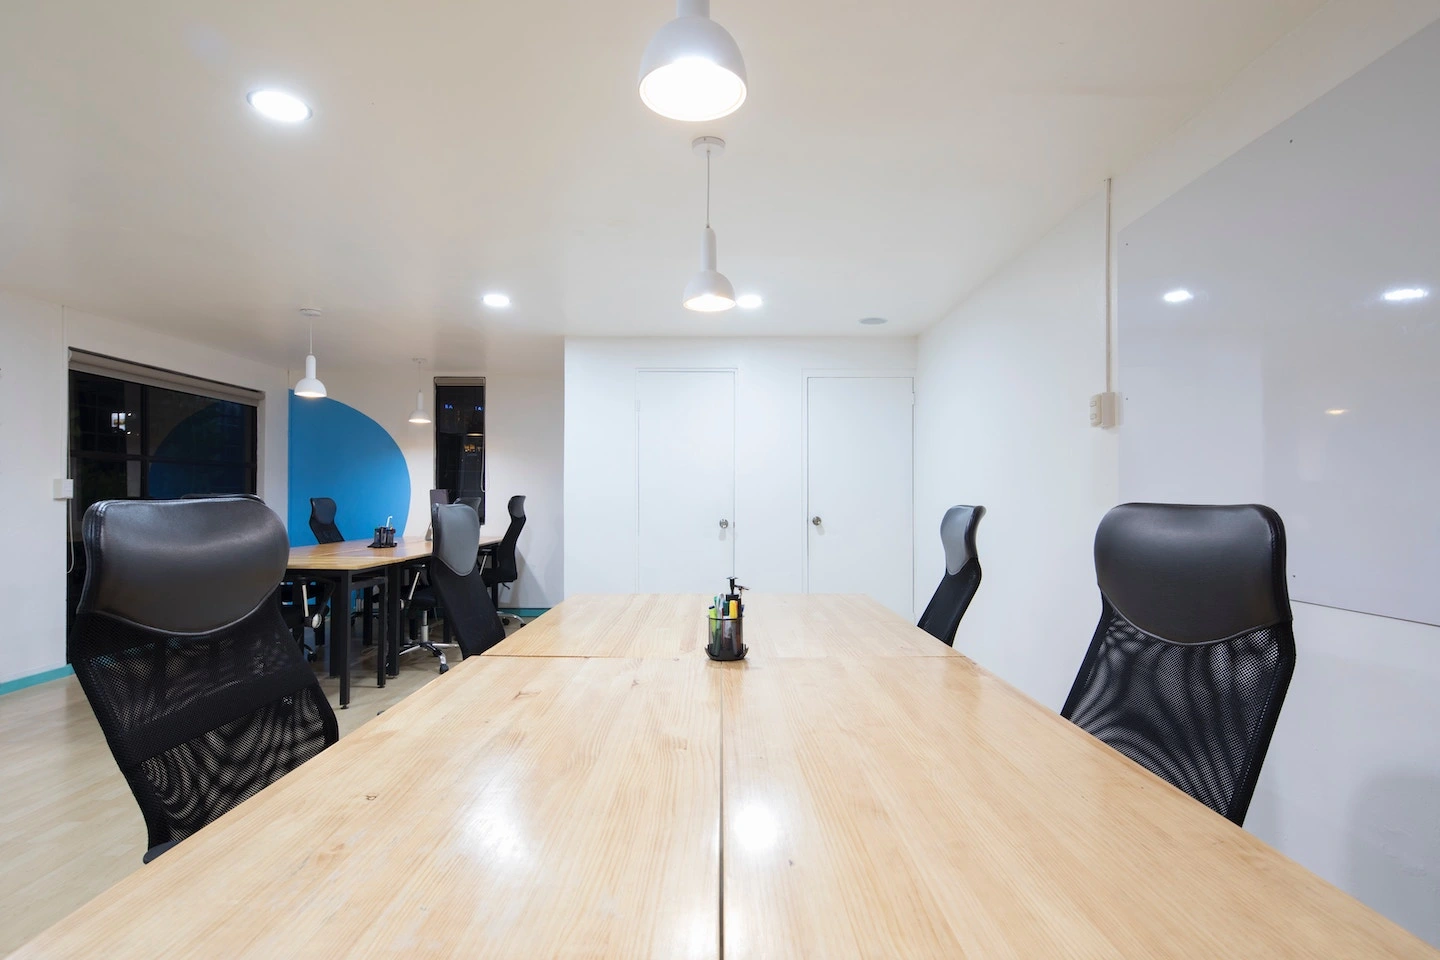 Office meeting room with pendant lighting fixtures and recessed lighting fixtures.